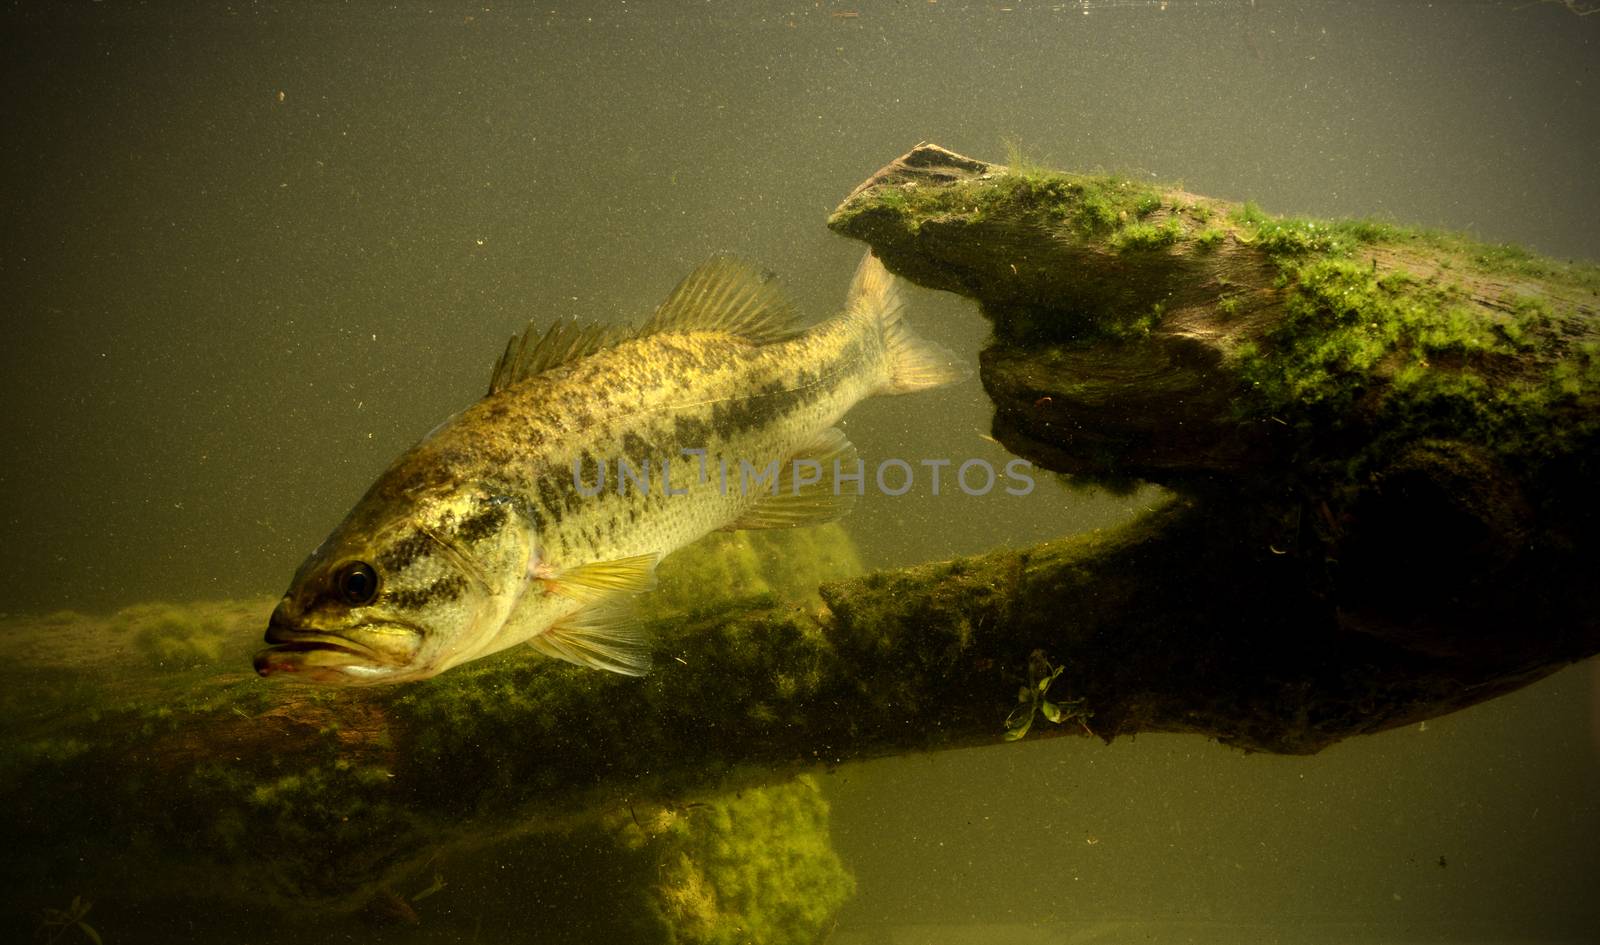 largemouth bass fish underwater in lake with algae